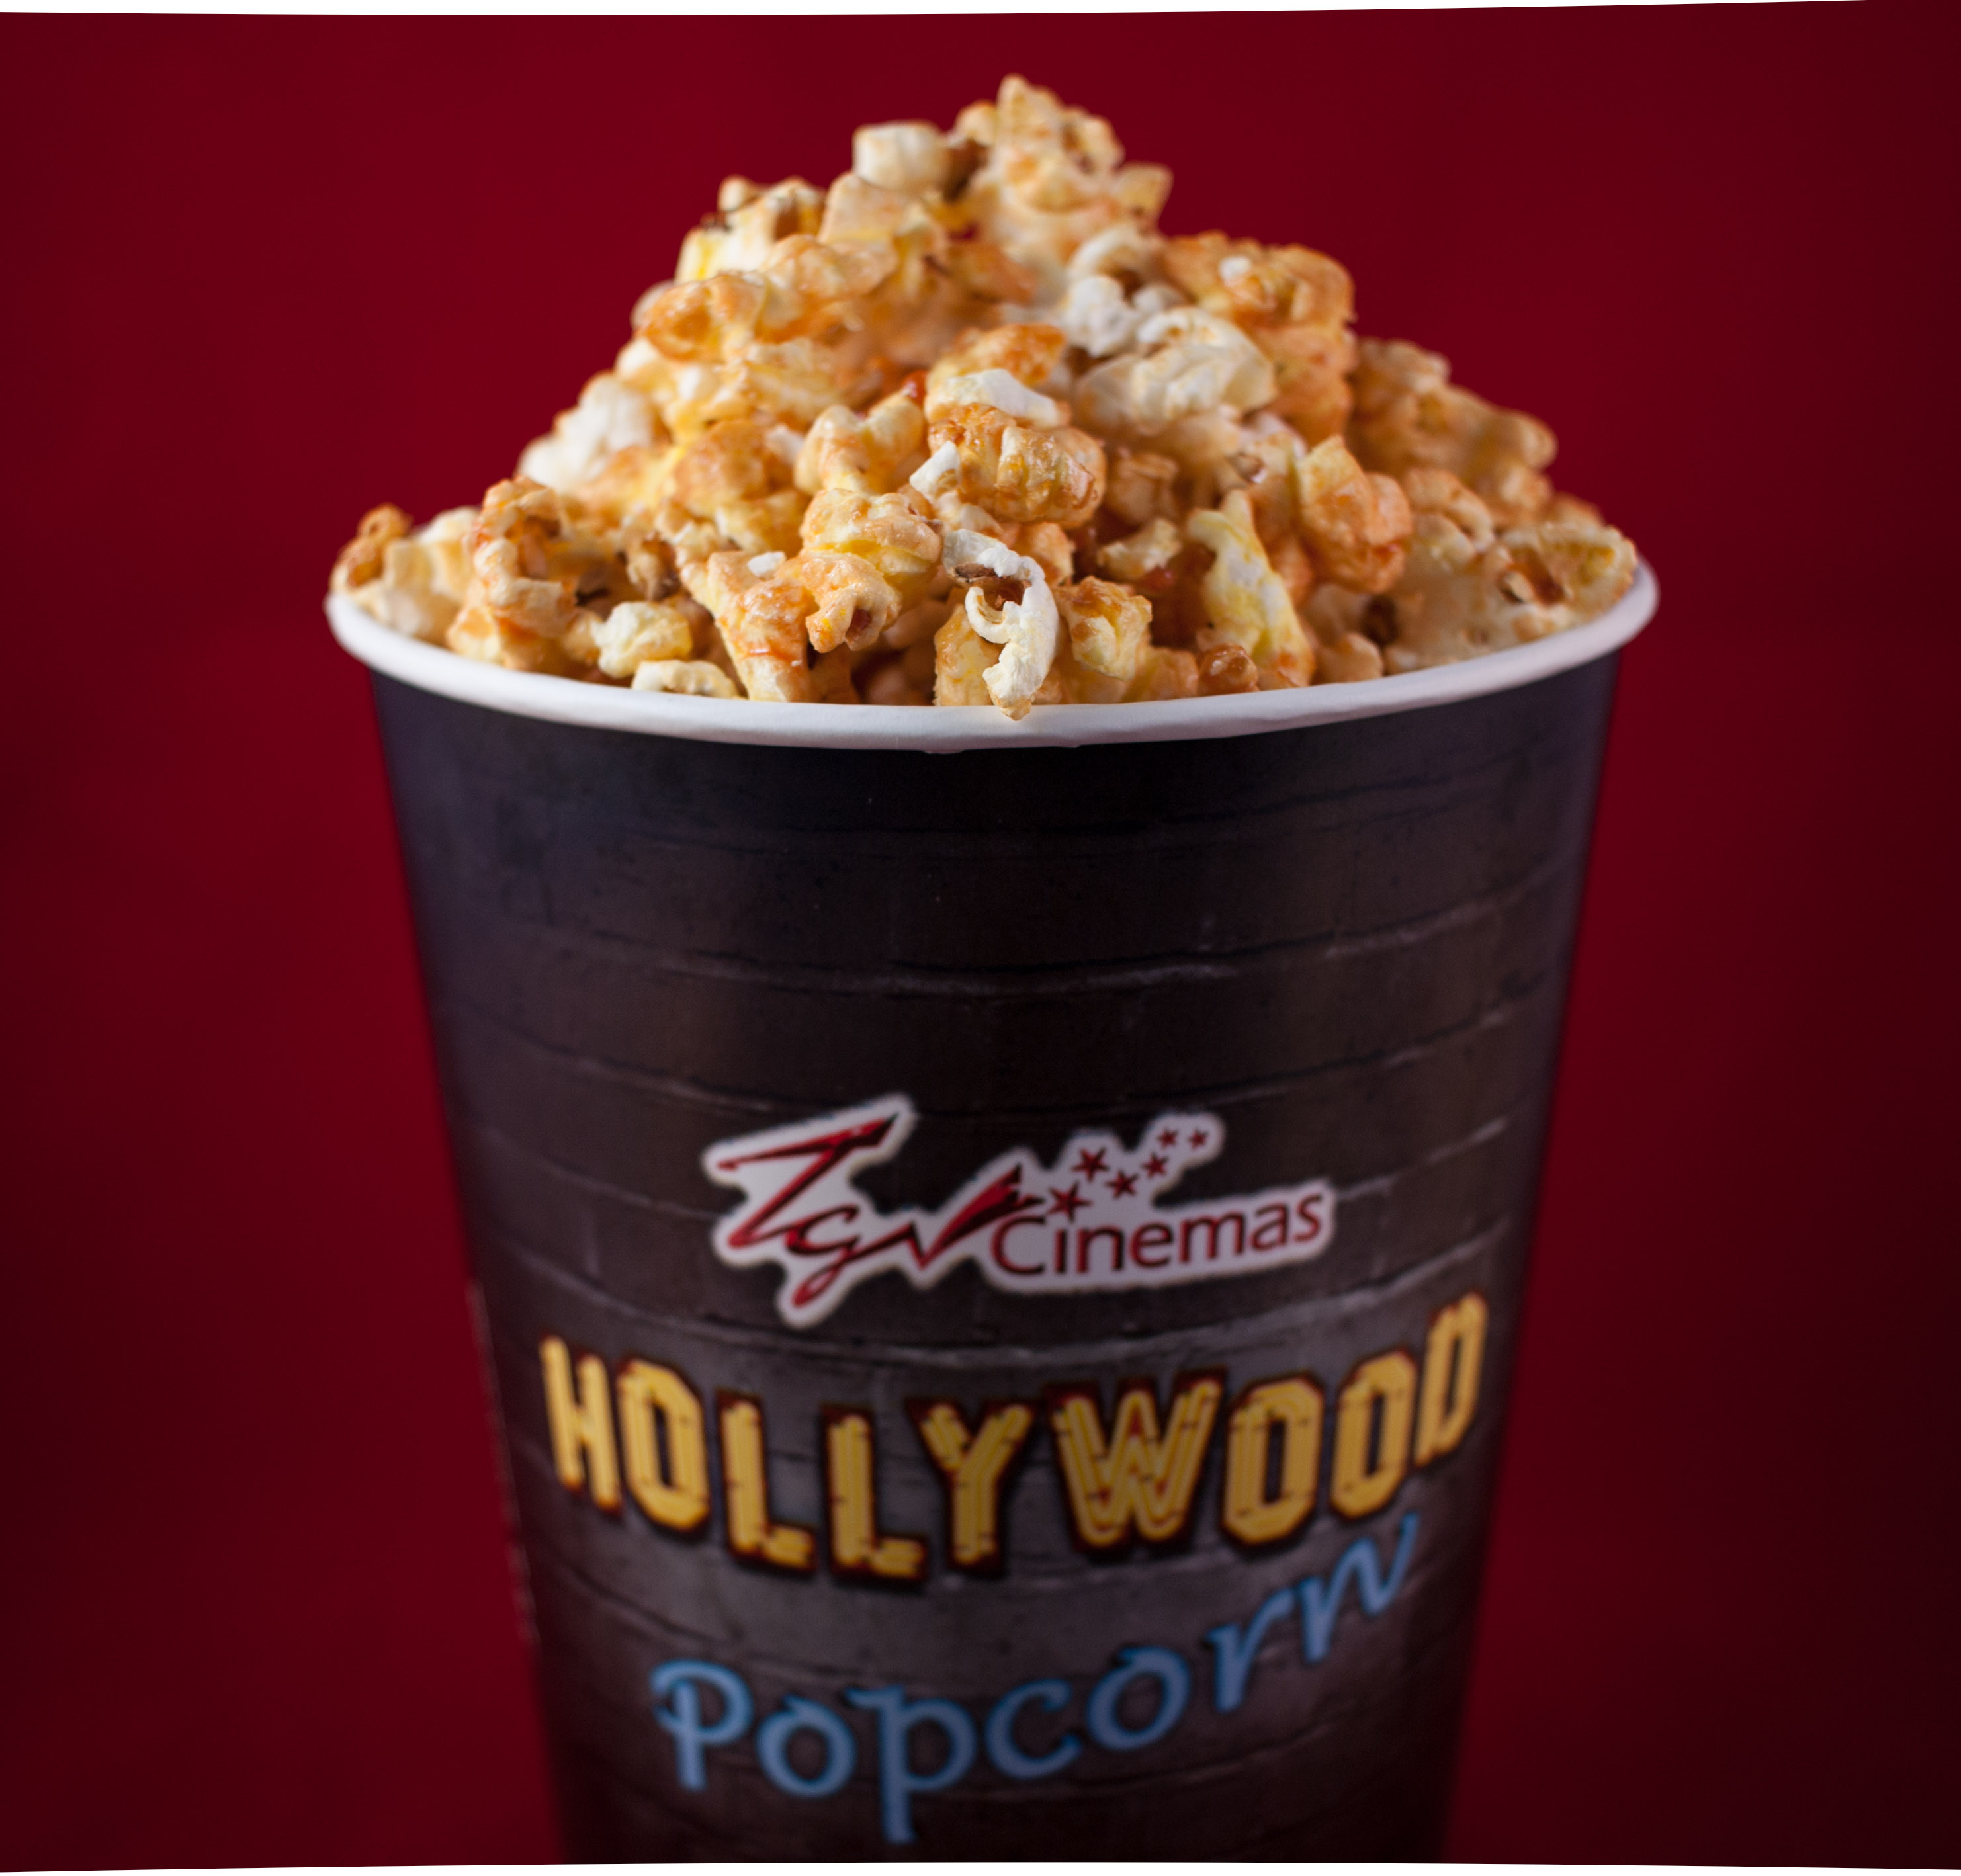 File:Cinema popcorn bucket.jpg - Wikimedia Commons